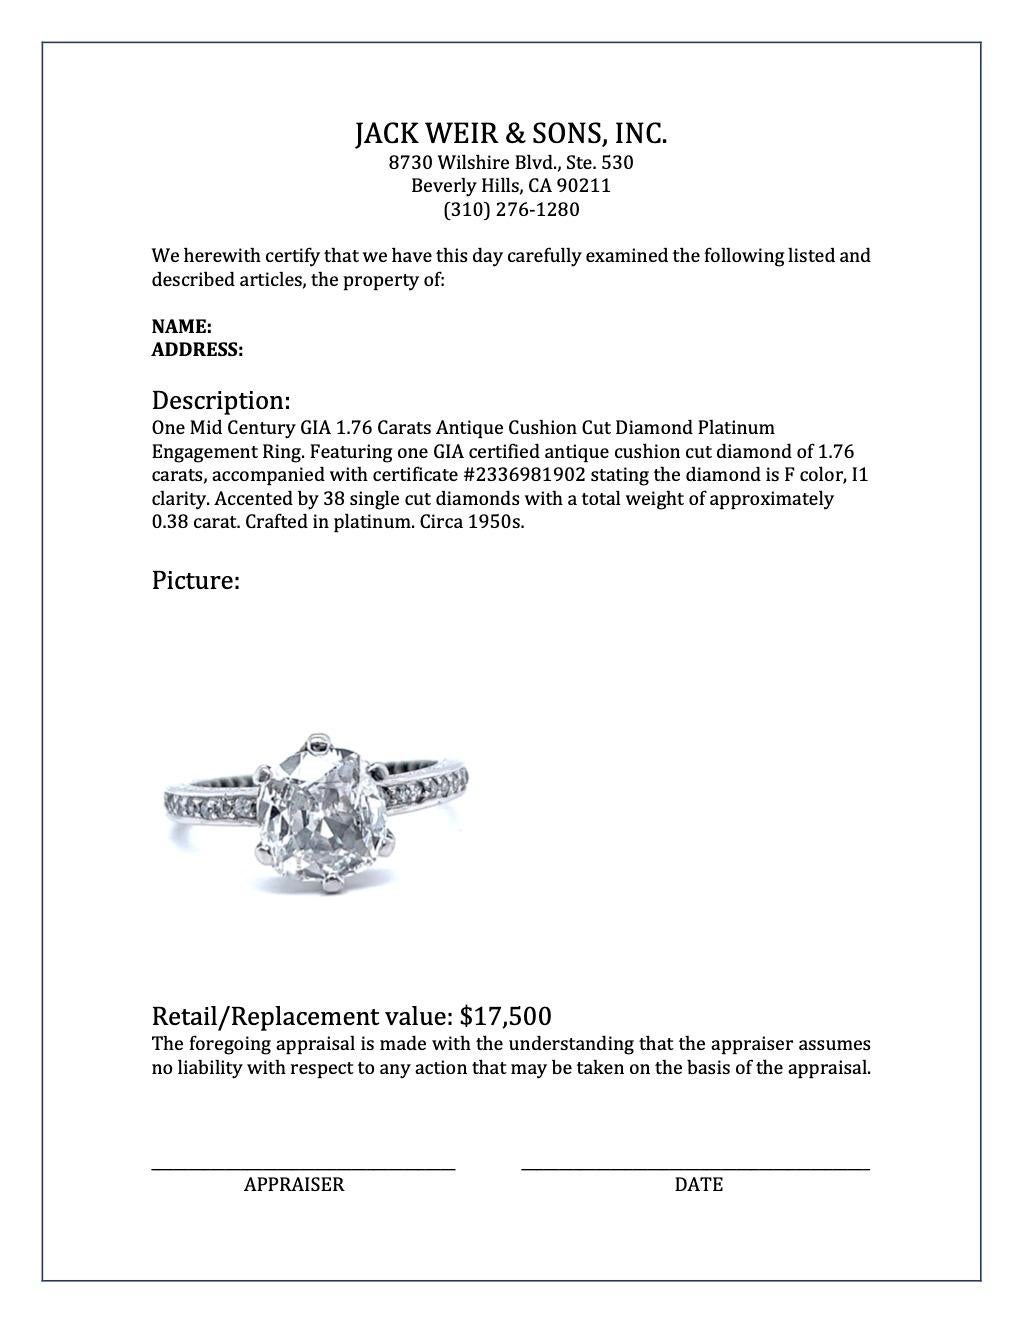 Mid-Century GIA 1.76 Carats Antique Cushion Cut Diamond Platinum Engagement Ring 4